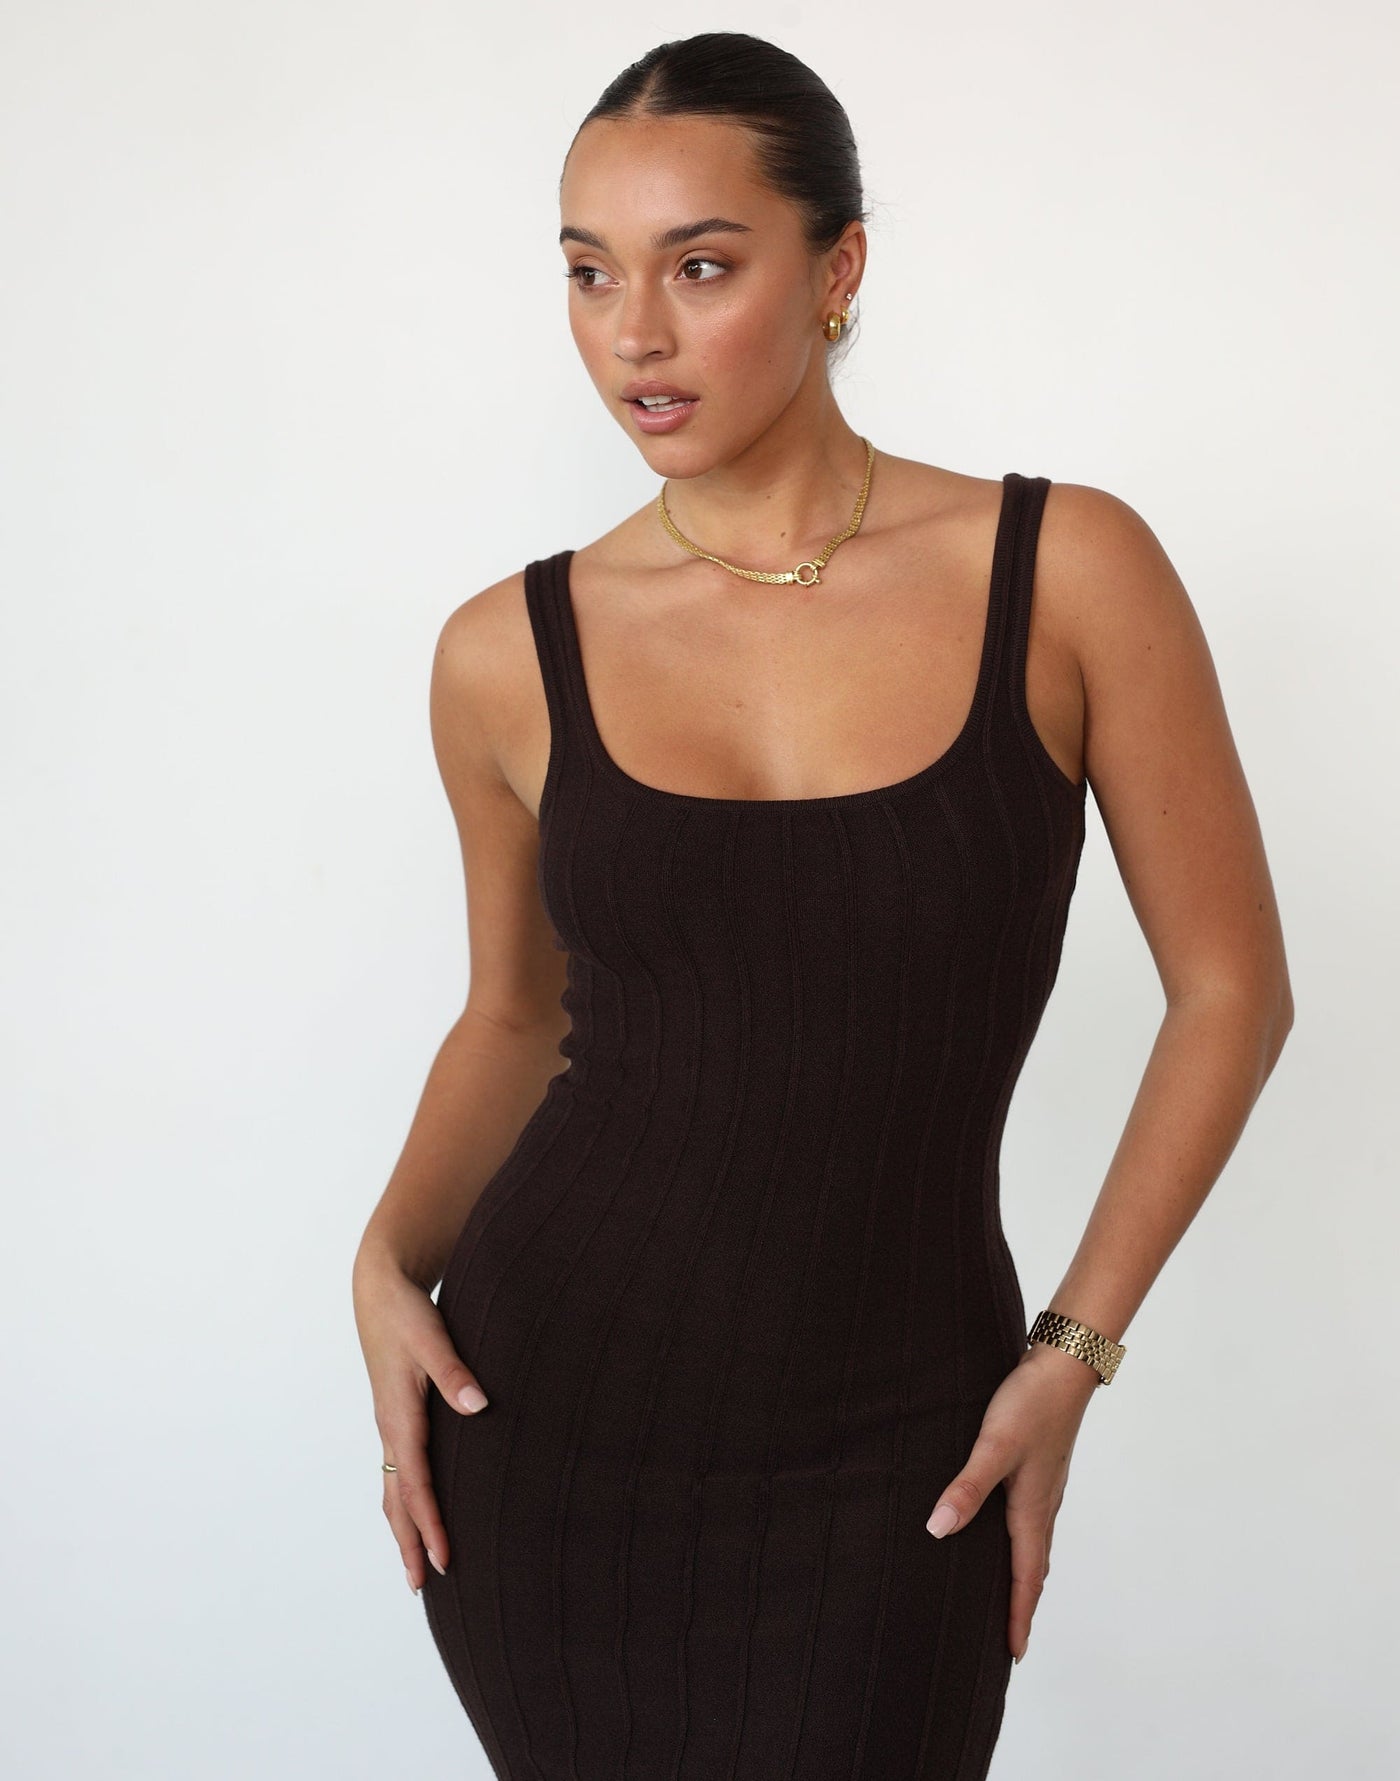 Ephemeral Maxi Dress (Chocolate) - Knit Ribbed Bodycon Maxi Dress - Women's Dress - Charcoal Clothing